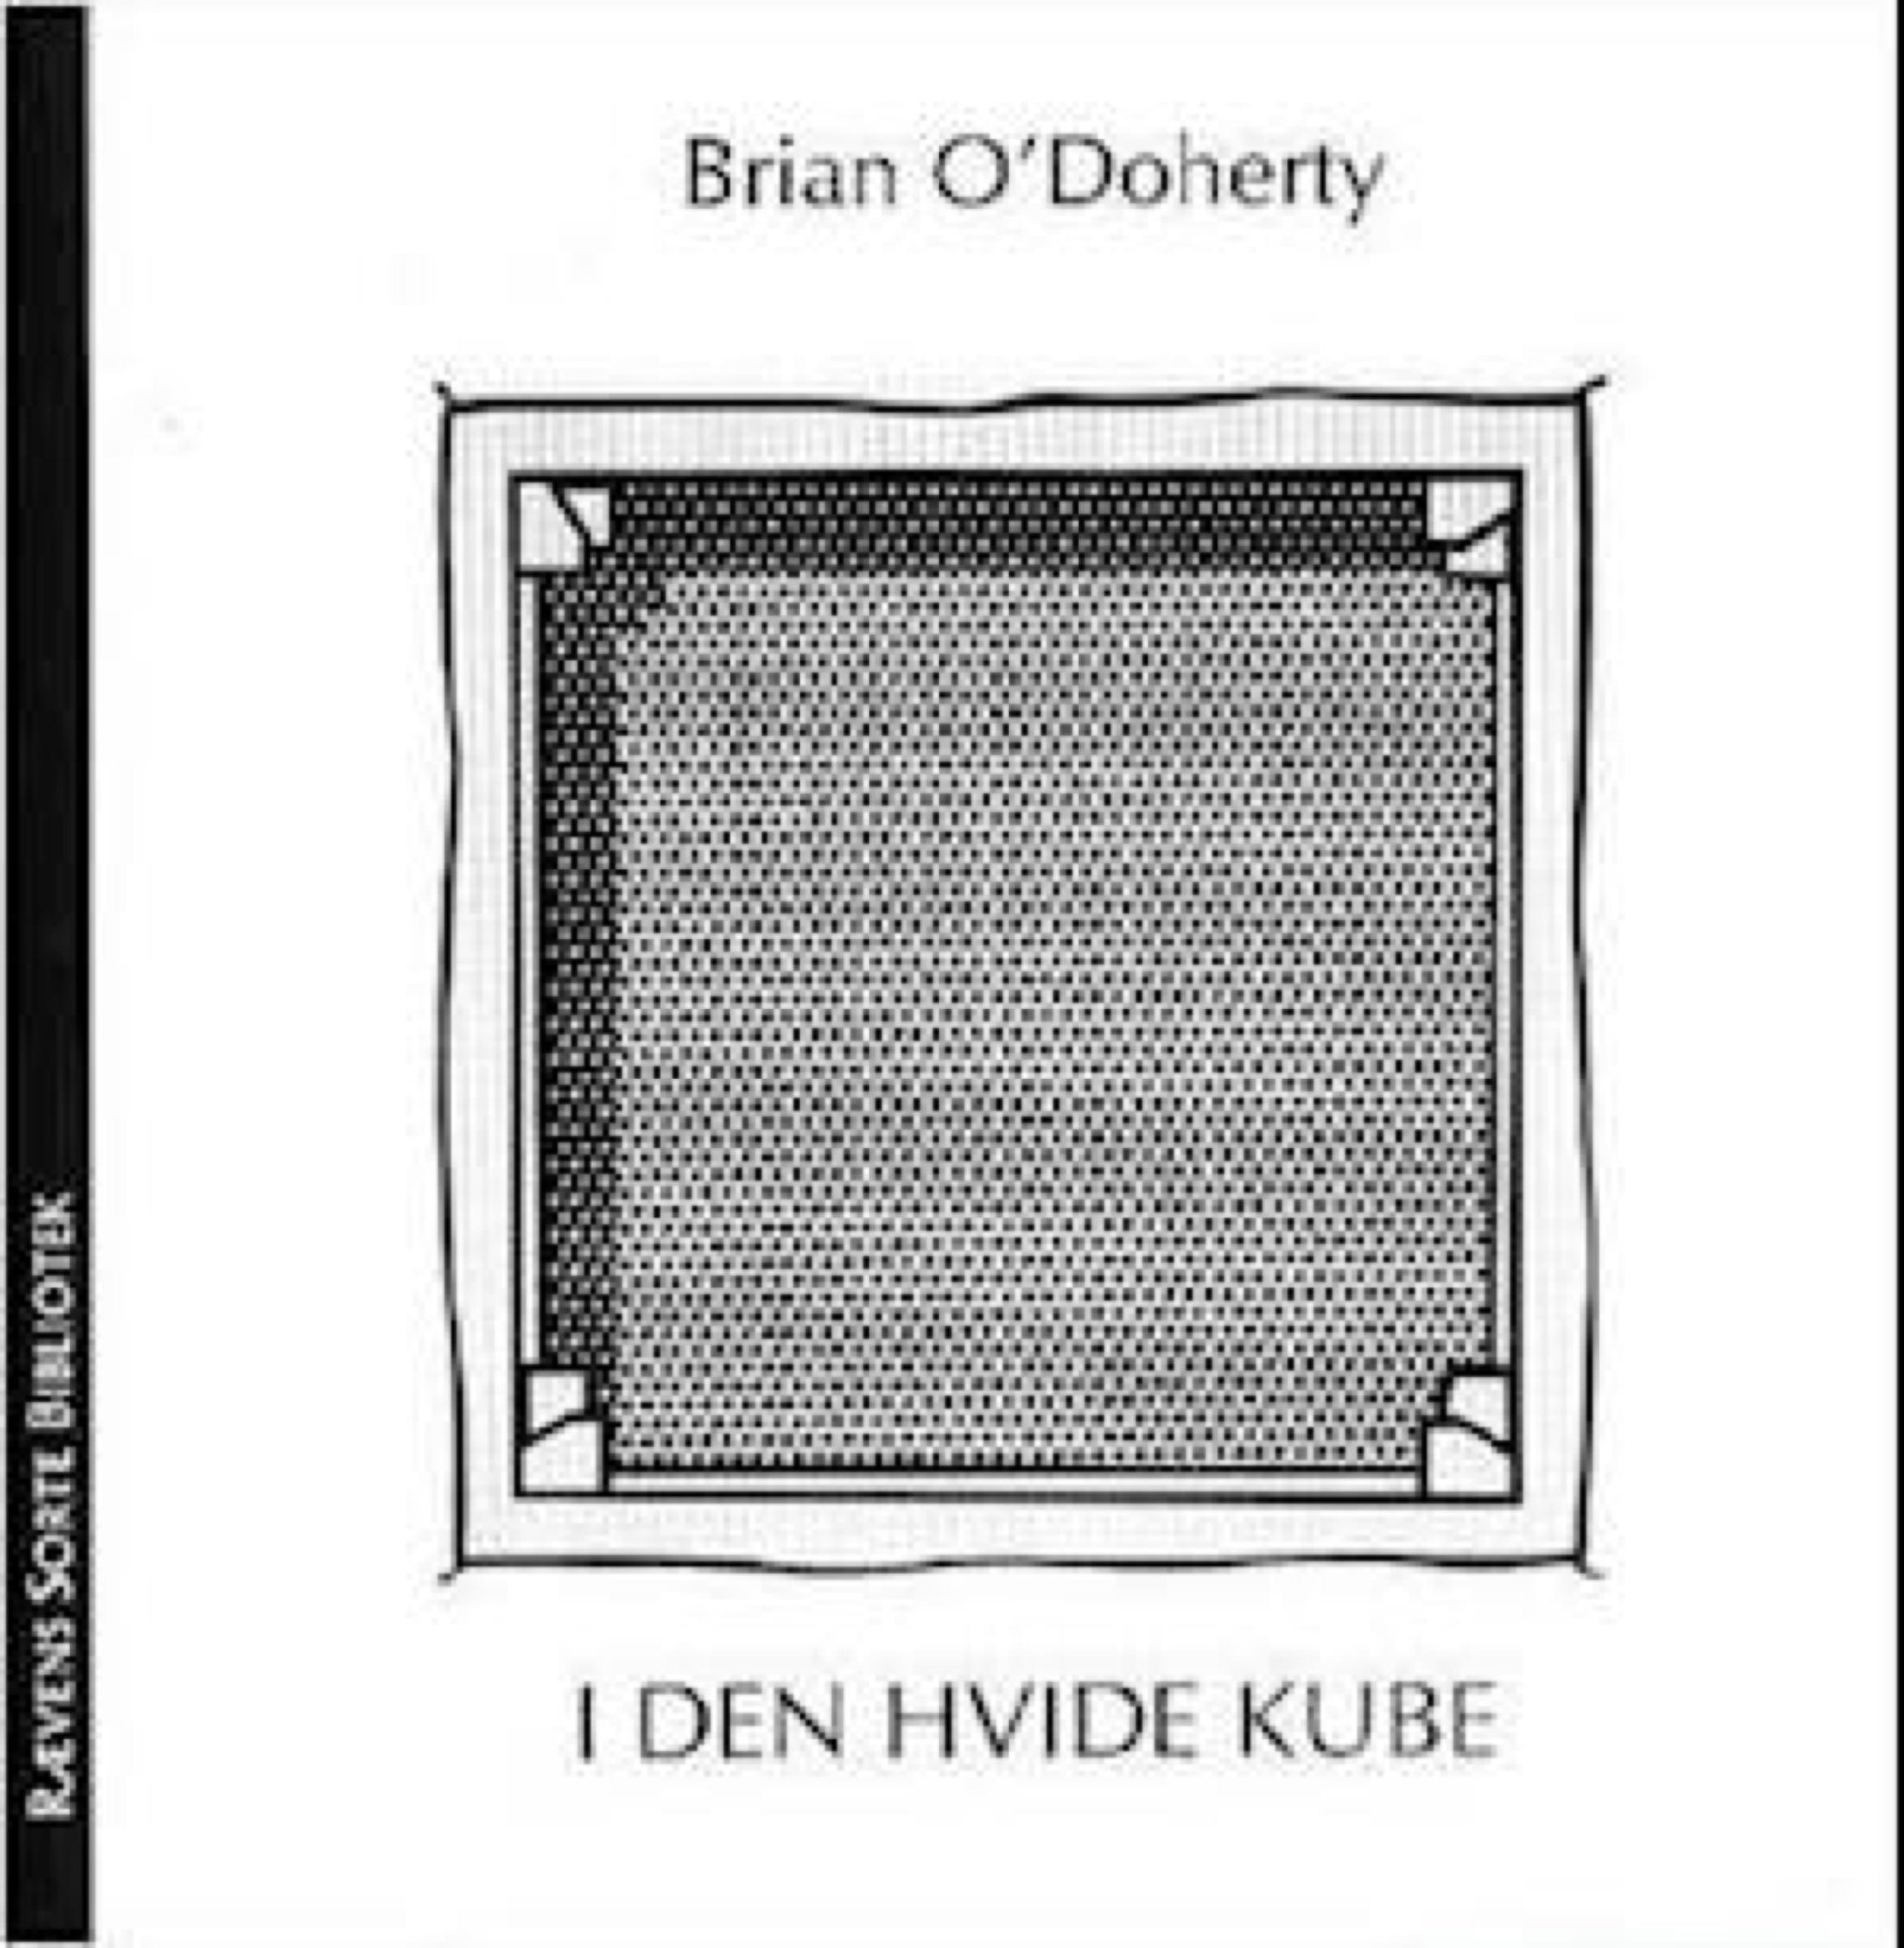 O'Doherty, Brian. I den hvide kube